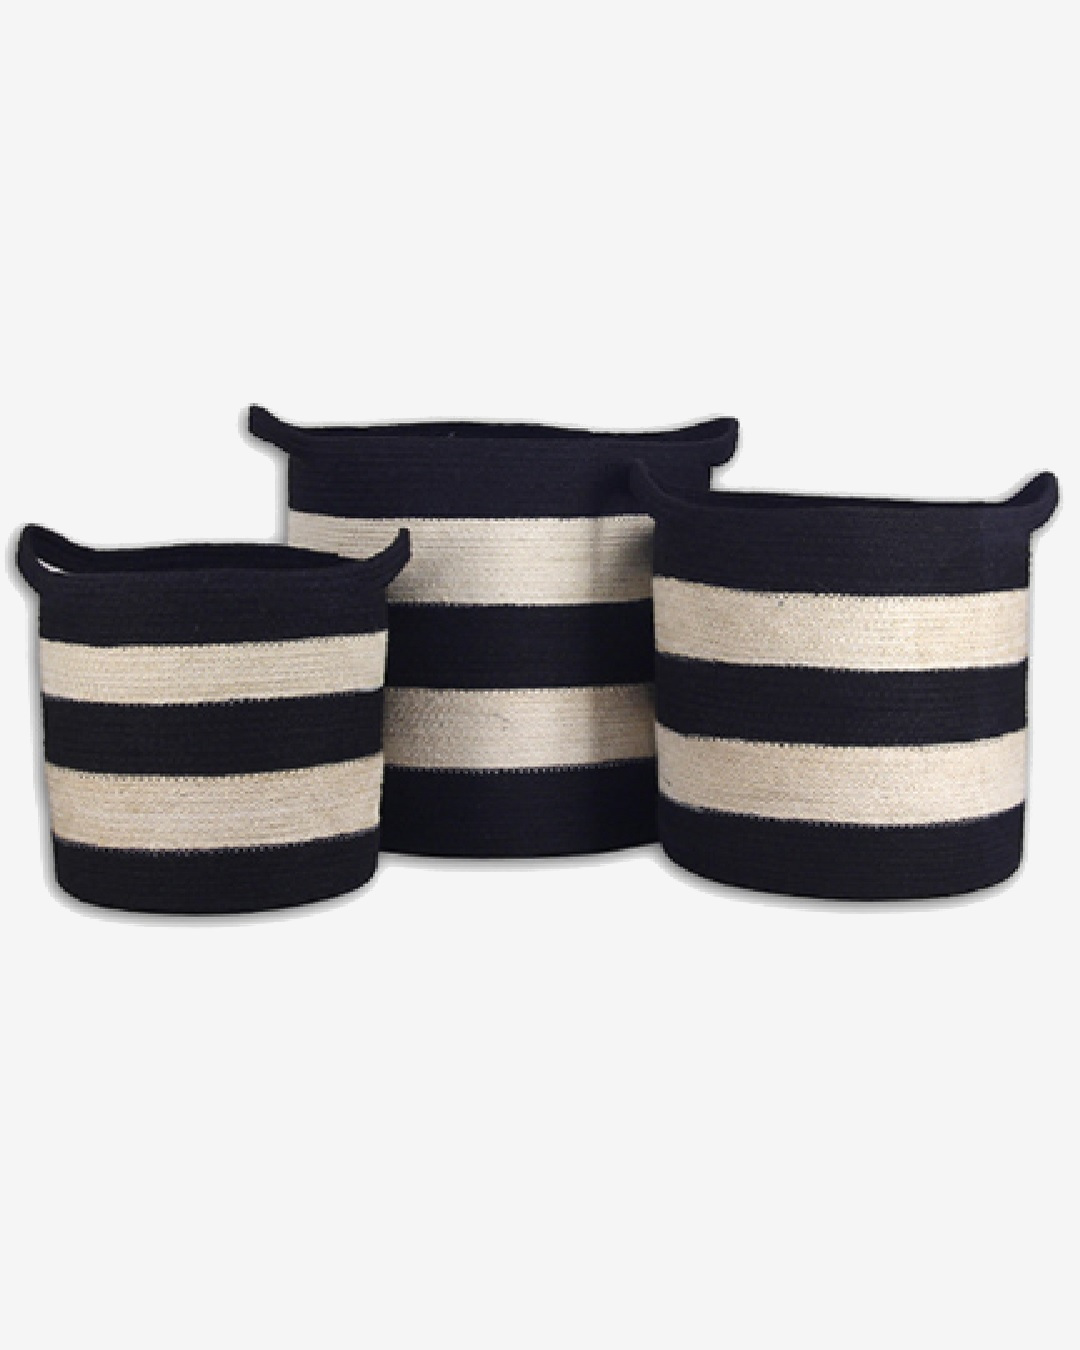 Black and white stripe jute baskets